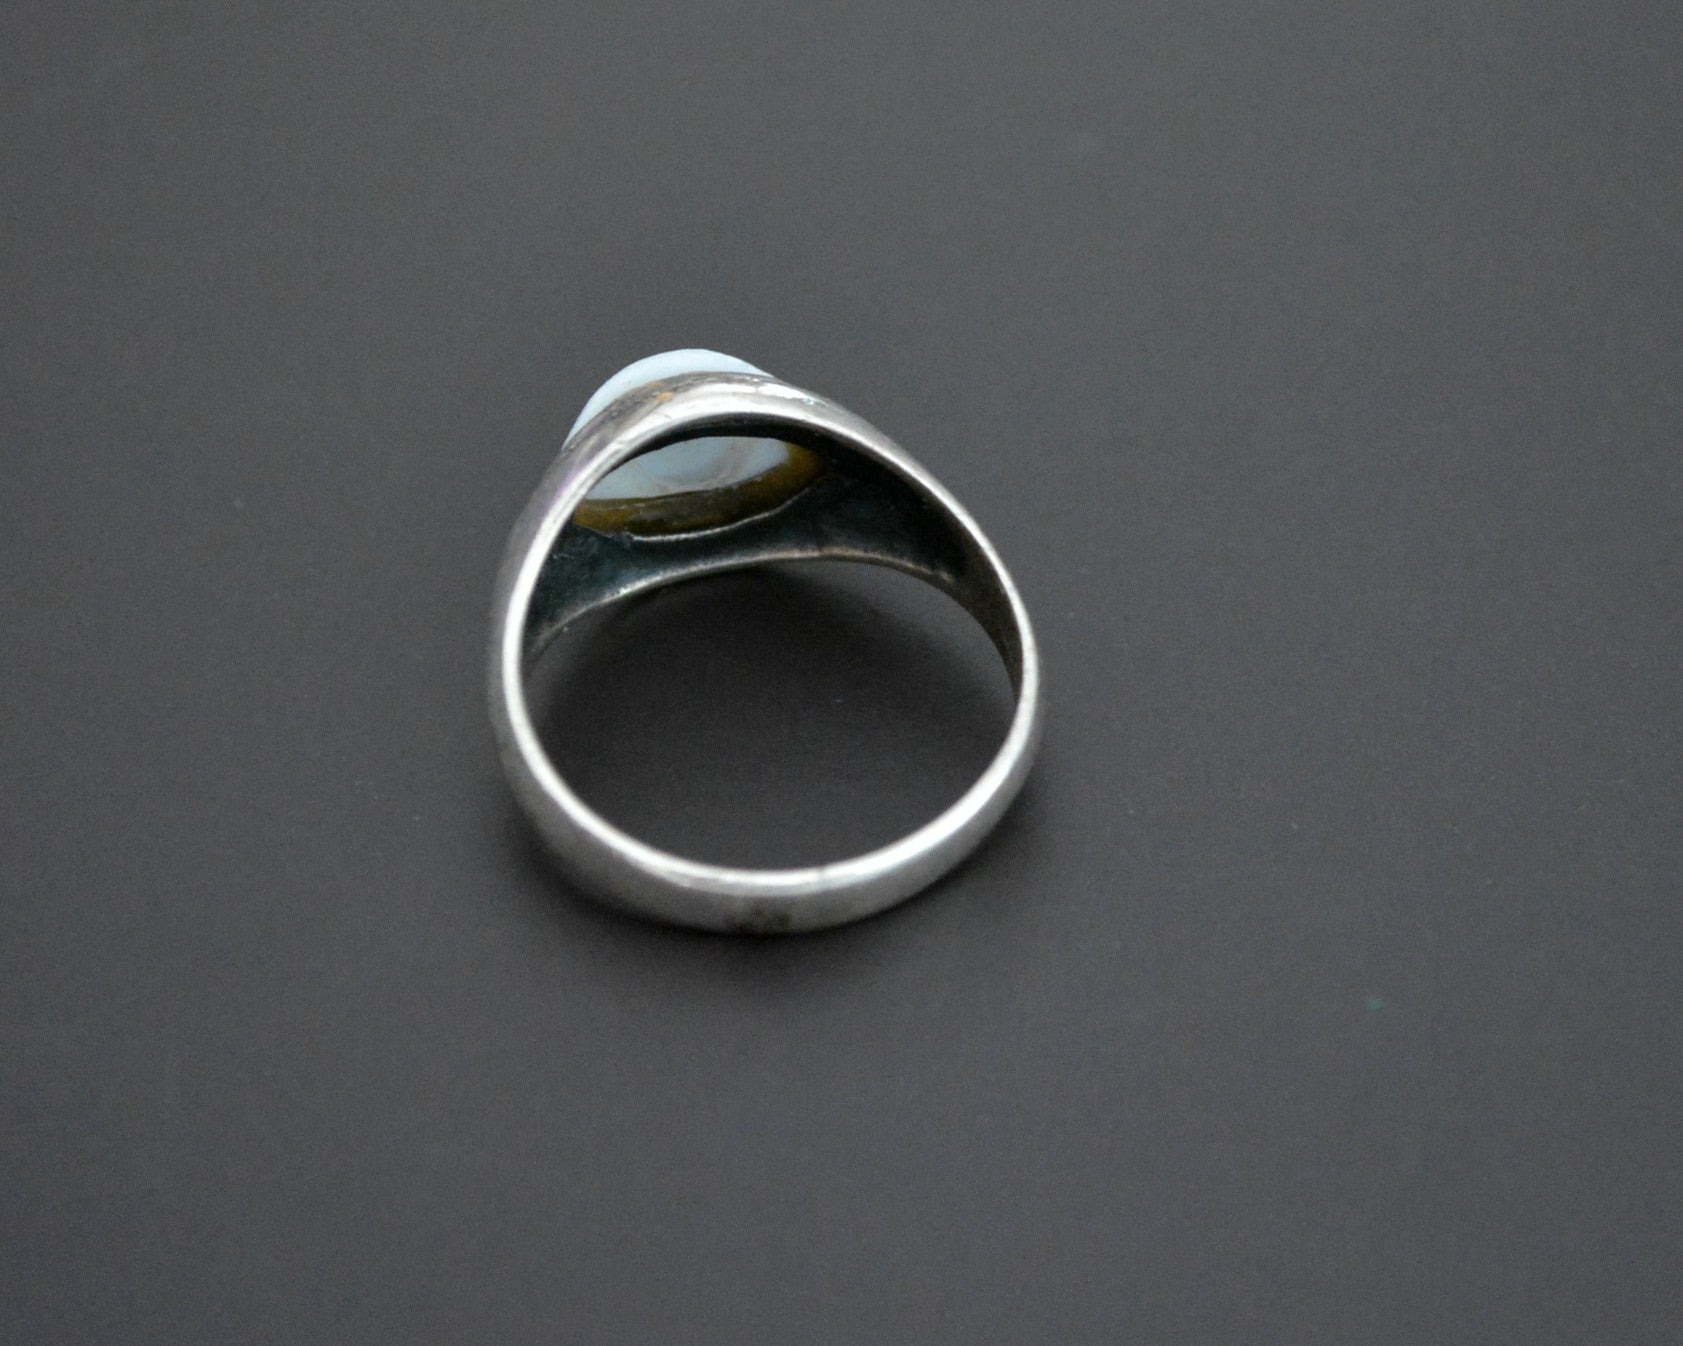 Silver Eye Ring - Size 7.5